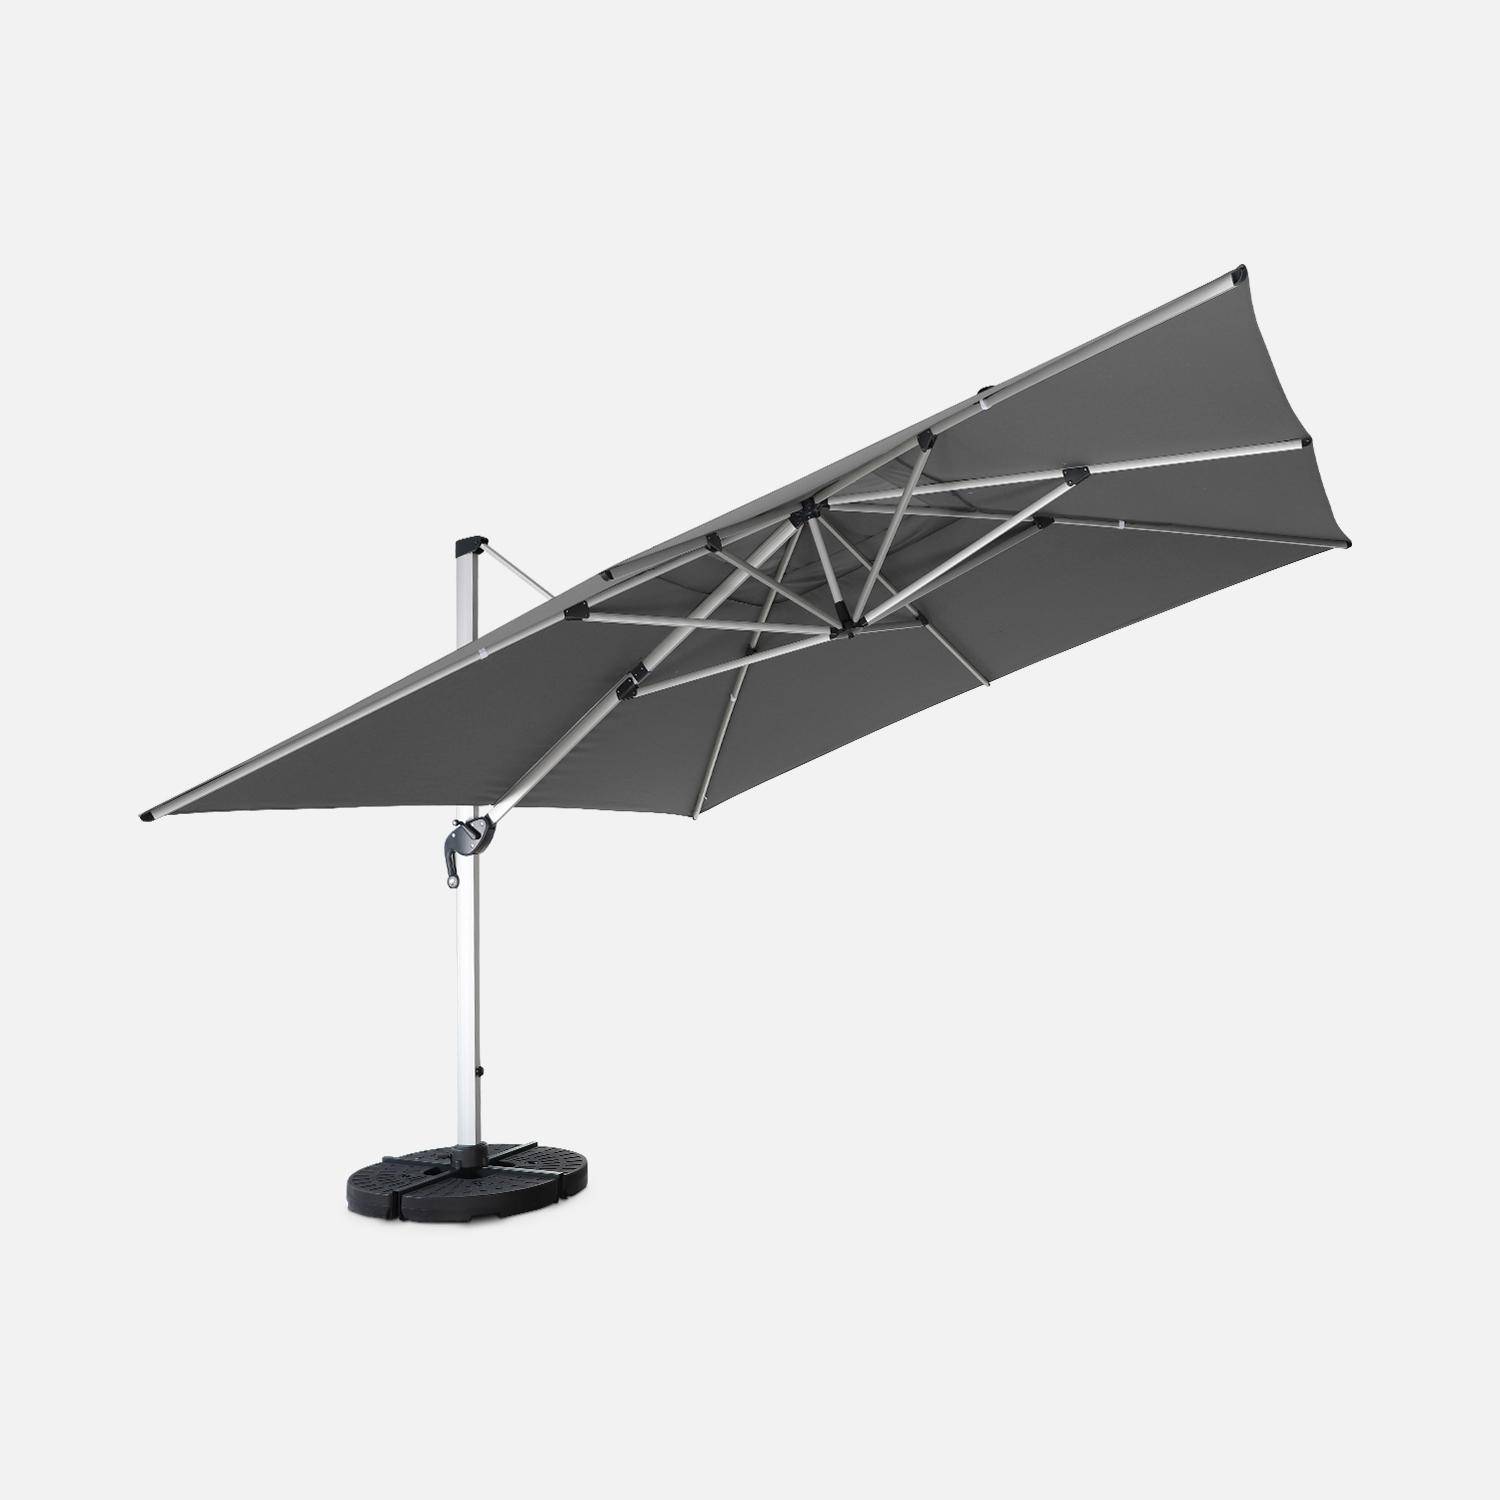 Topklasse parasol, 4x4m, grijs polyester doek, geanodiseerd aluminium frame, hoes inbegrepen Photo3